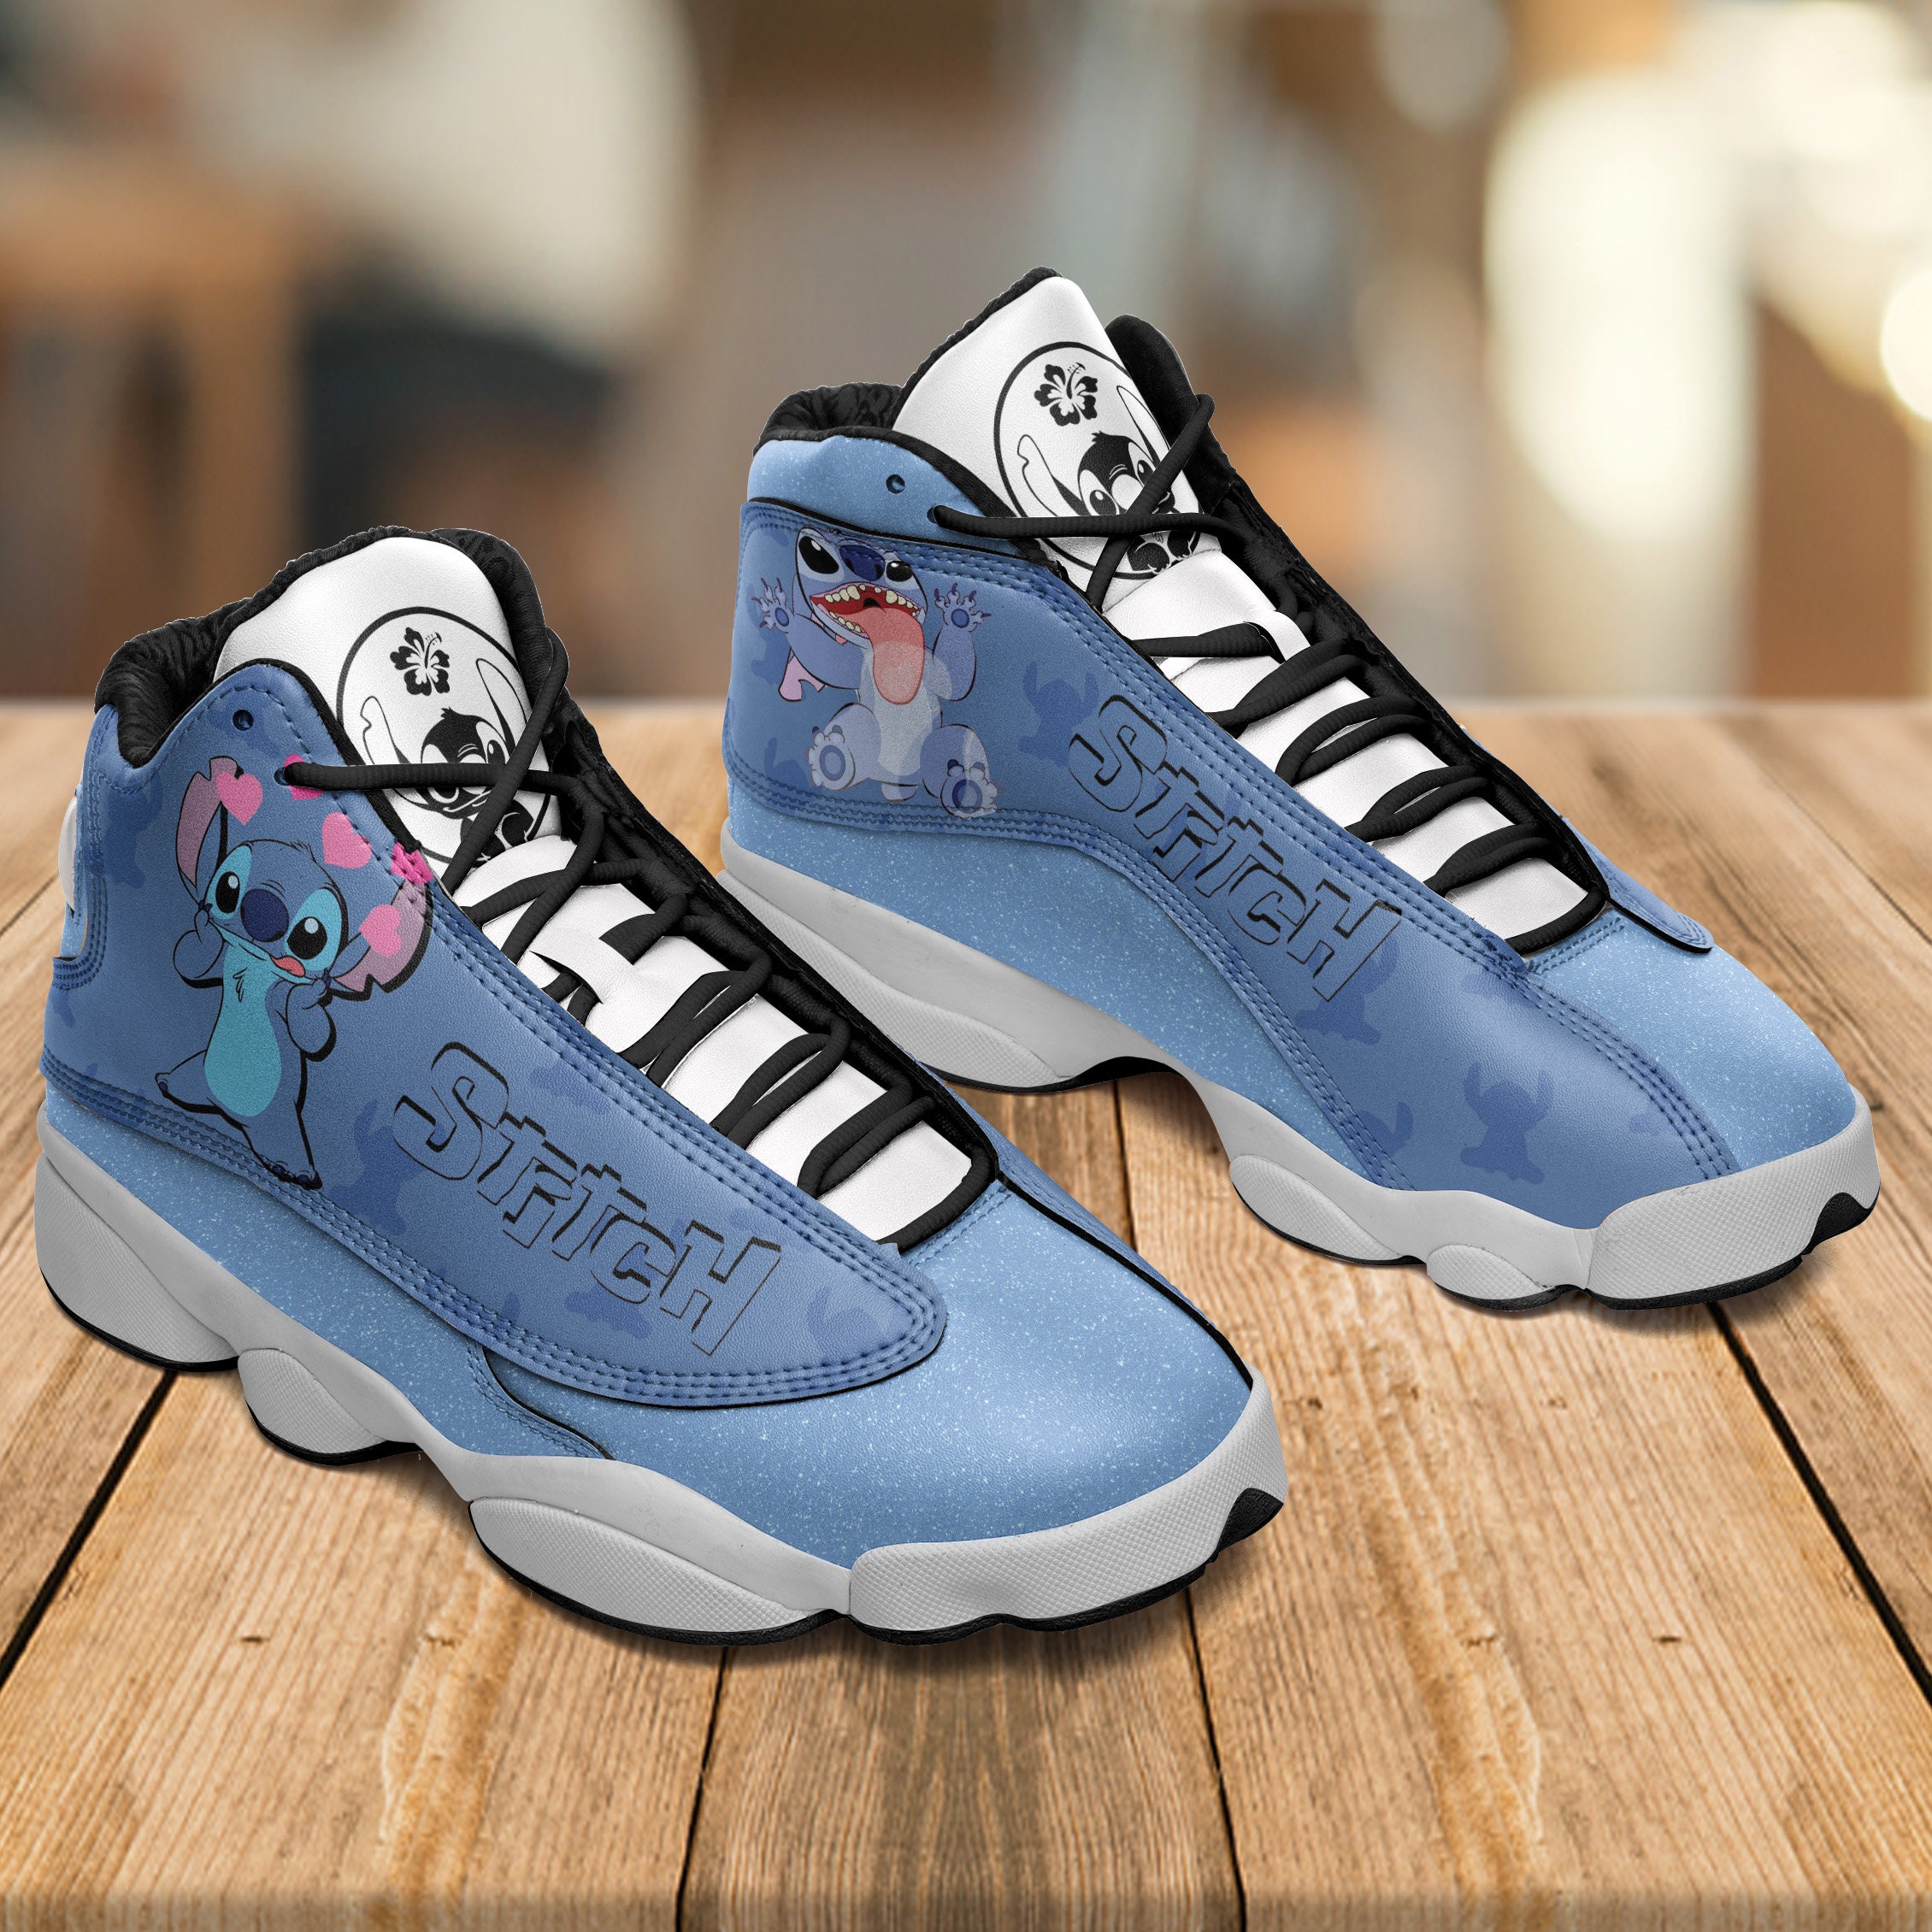 Stitch Disney Jordan 13 Shoes Custom Jd13 Sneakers Gift For | Etsy